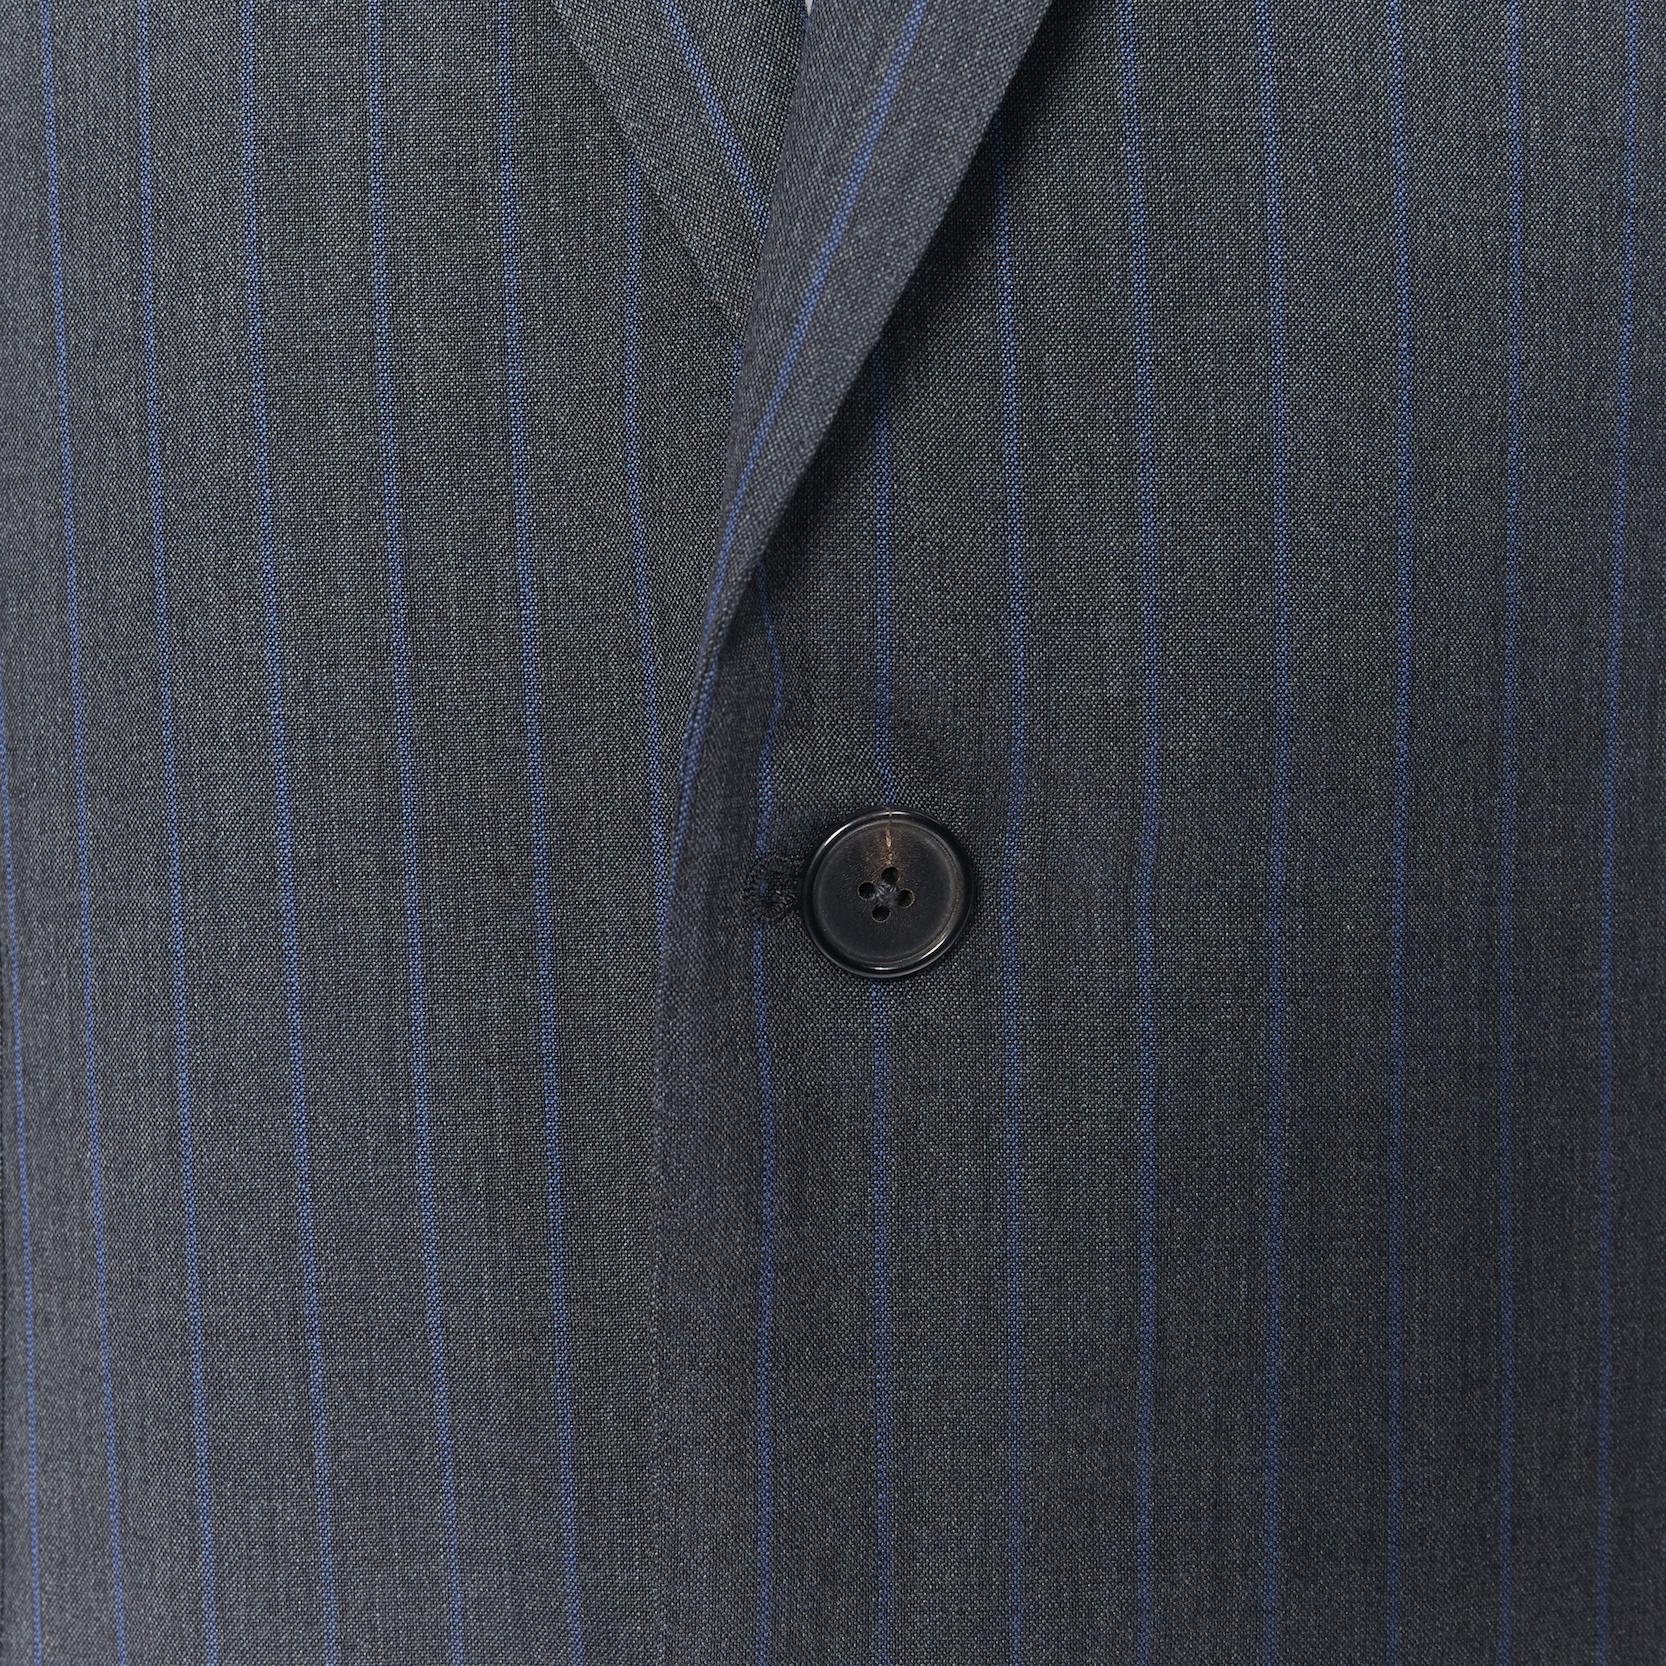 ERMENEGILDO ZEGNA Cool Effect grey blue pinstripe wool classic blazer jacket 50R 3